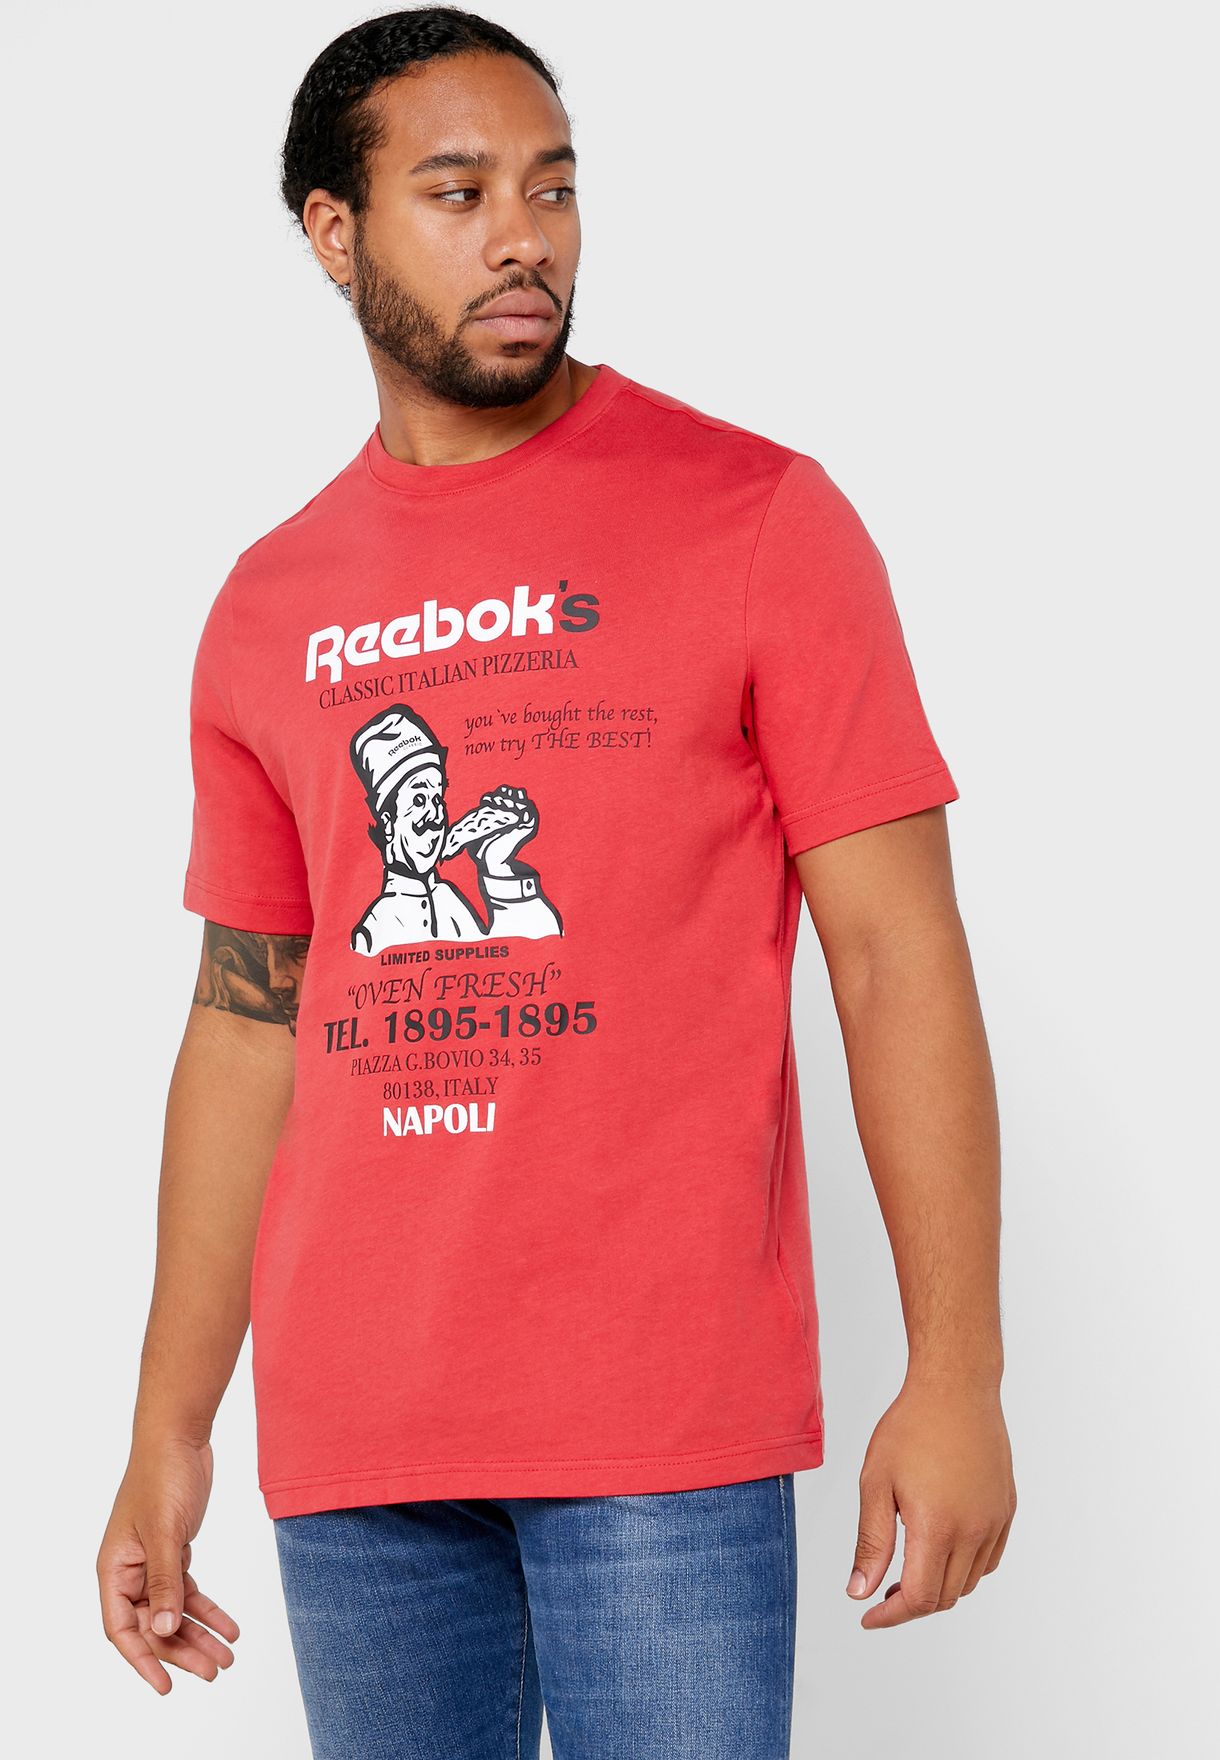 reebok classic t shirt